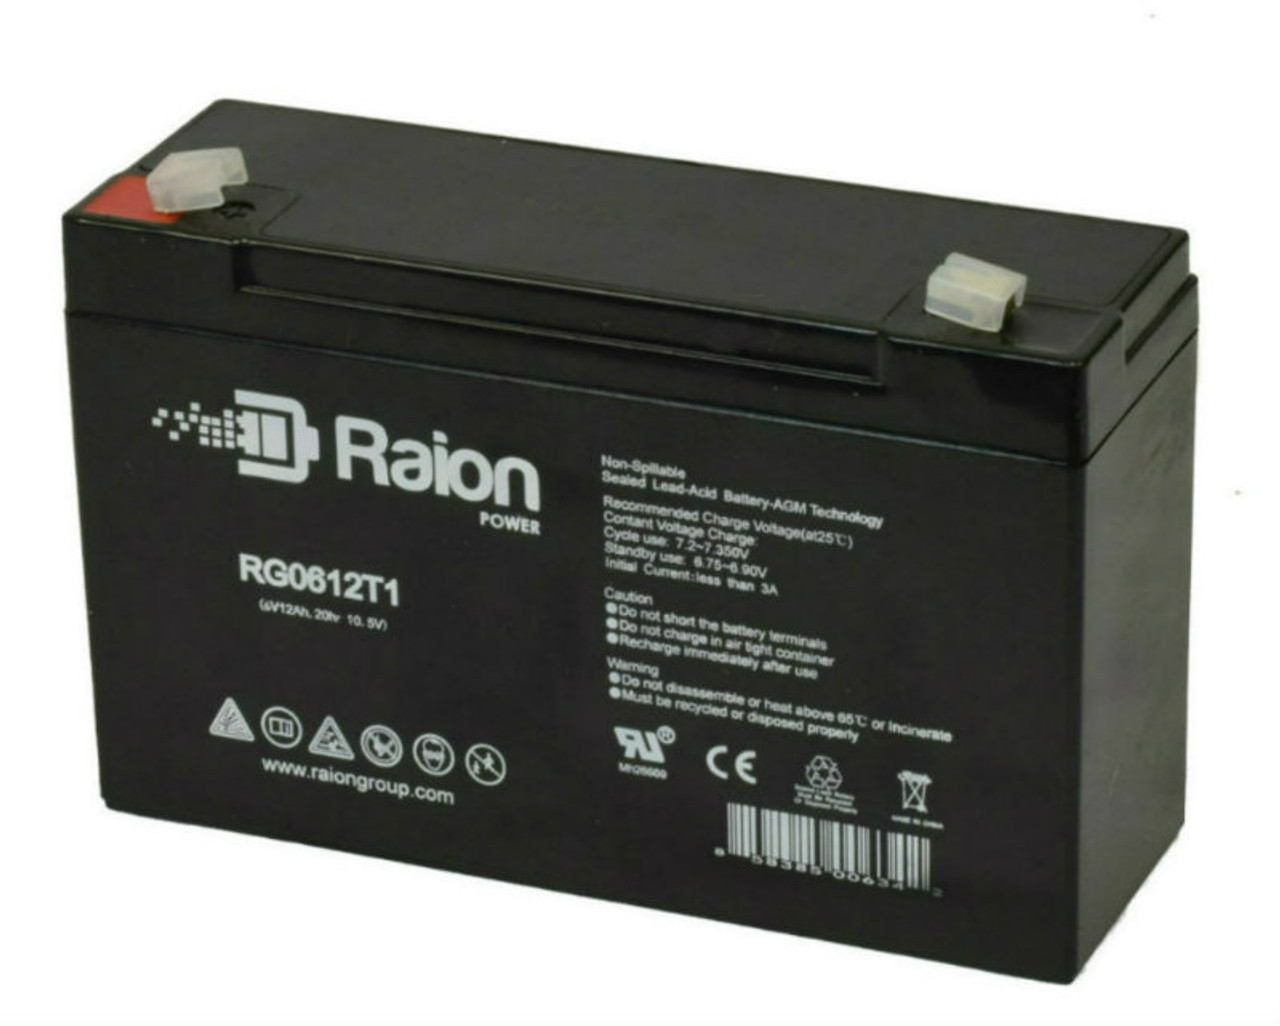 Raion Power RG06120T1 Replacement 6V 12Ah Emergency Light Battery for Big Beam 2ET6S8